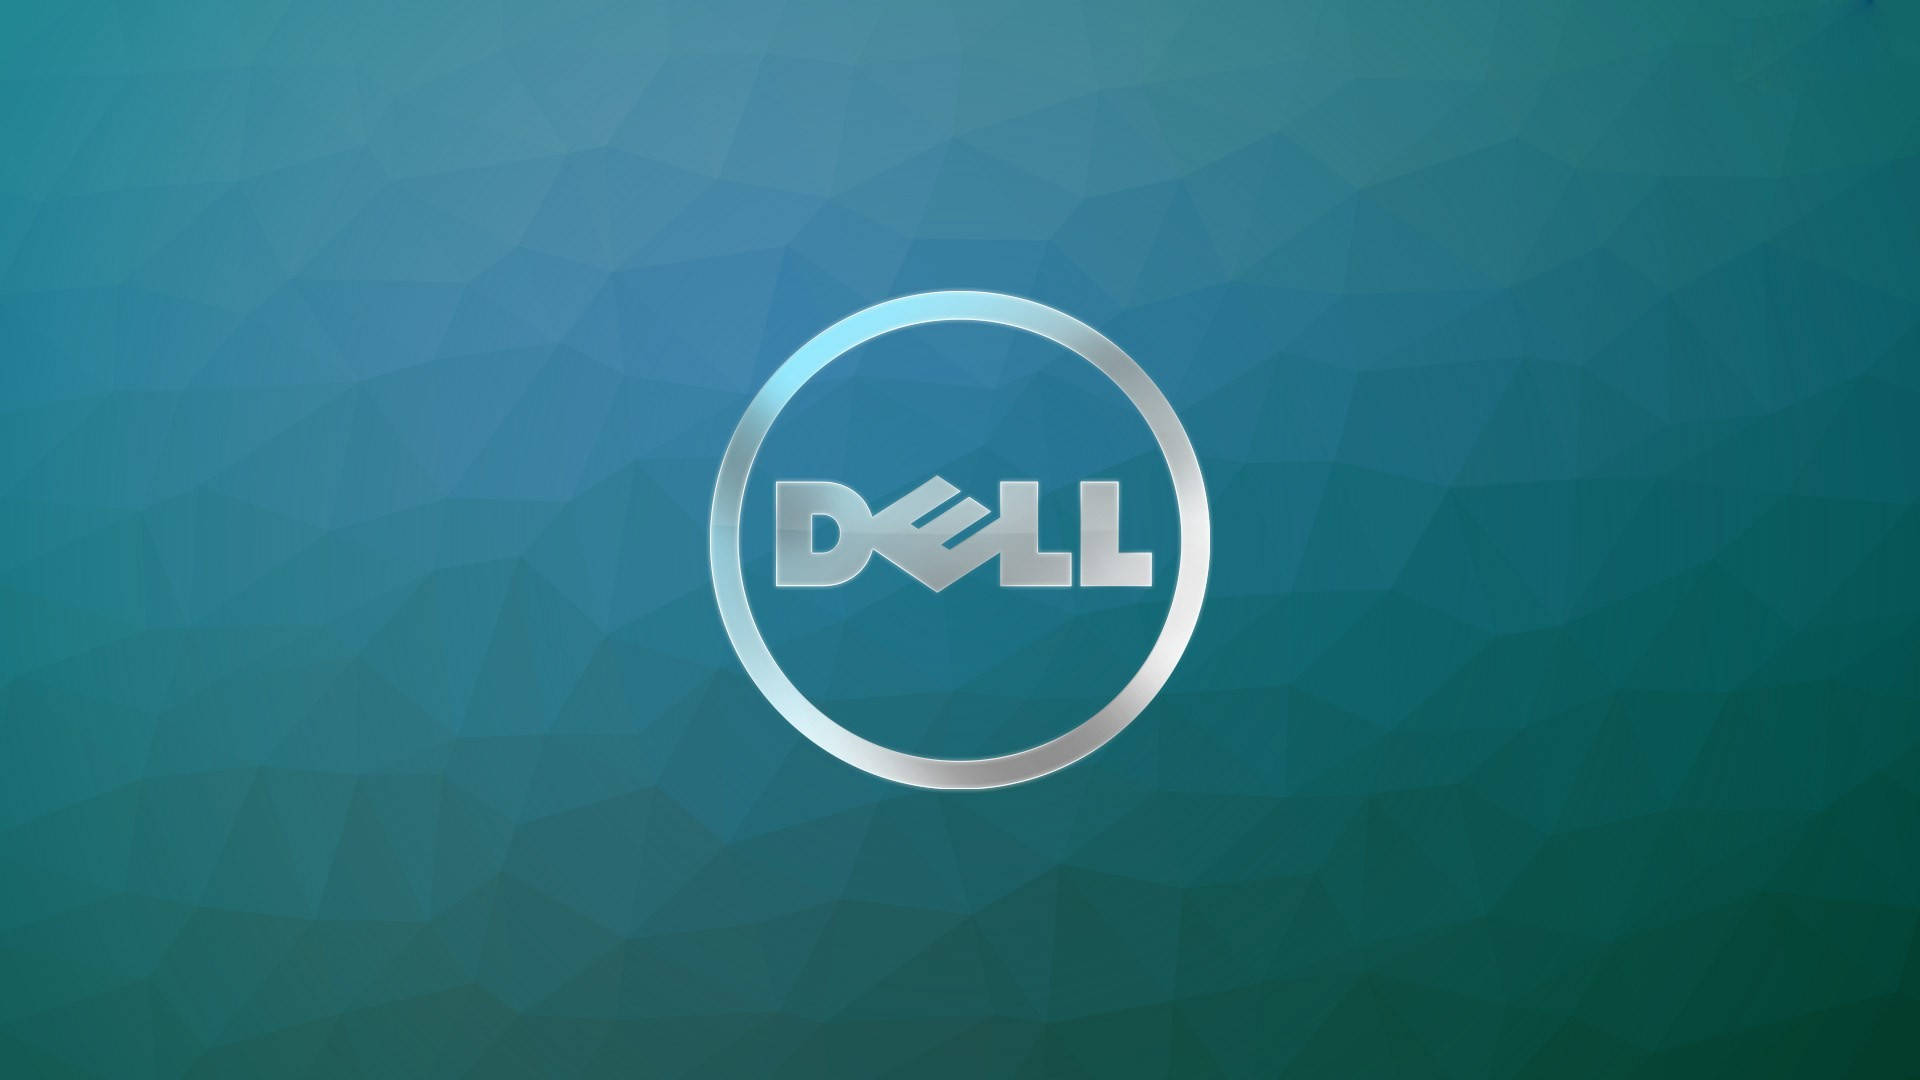 Silver Dell Hd Logo Background